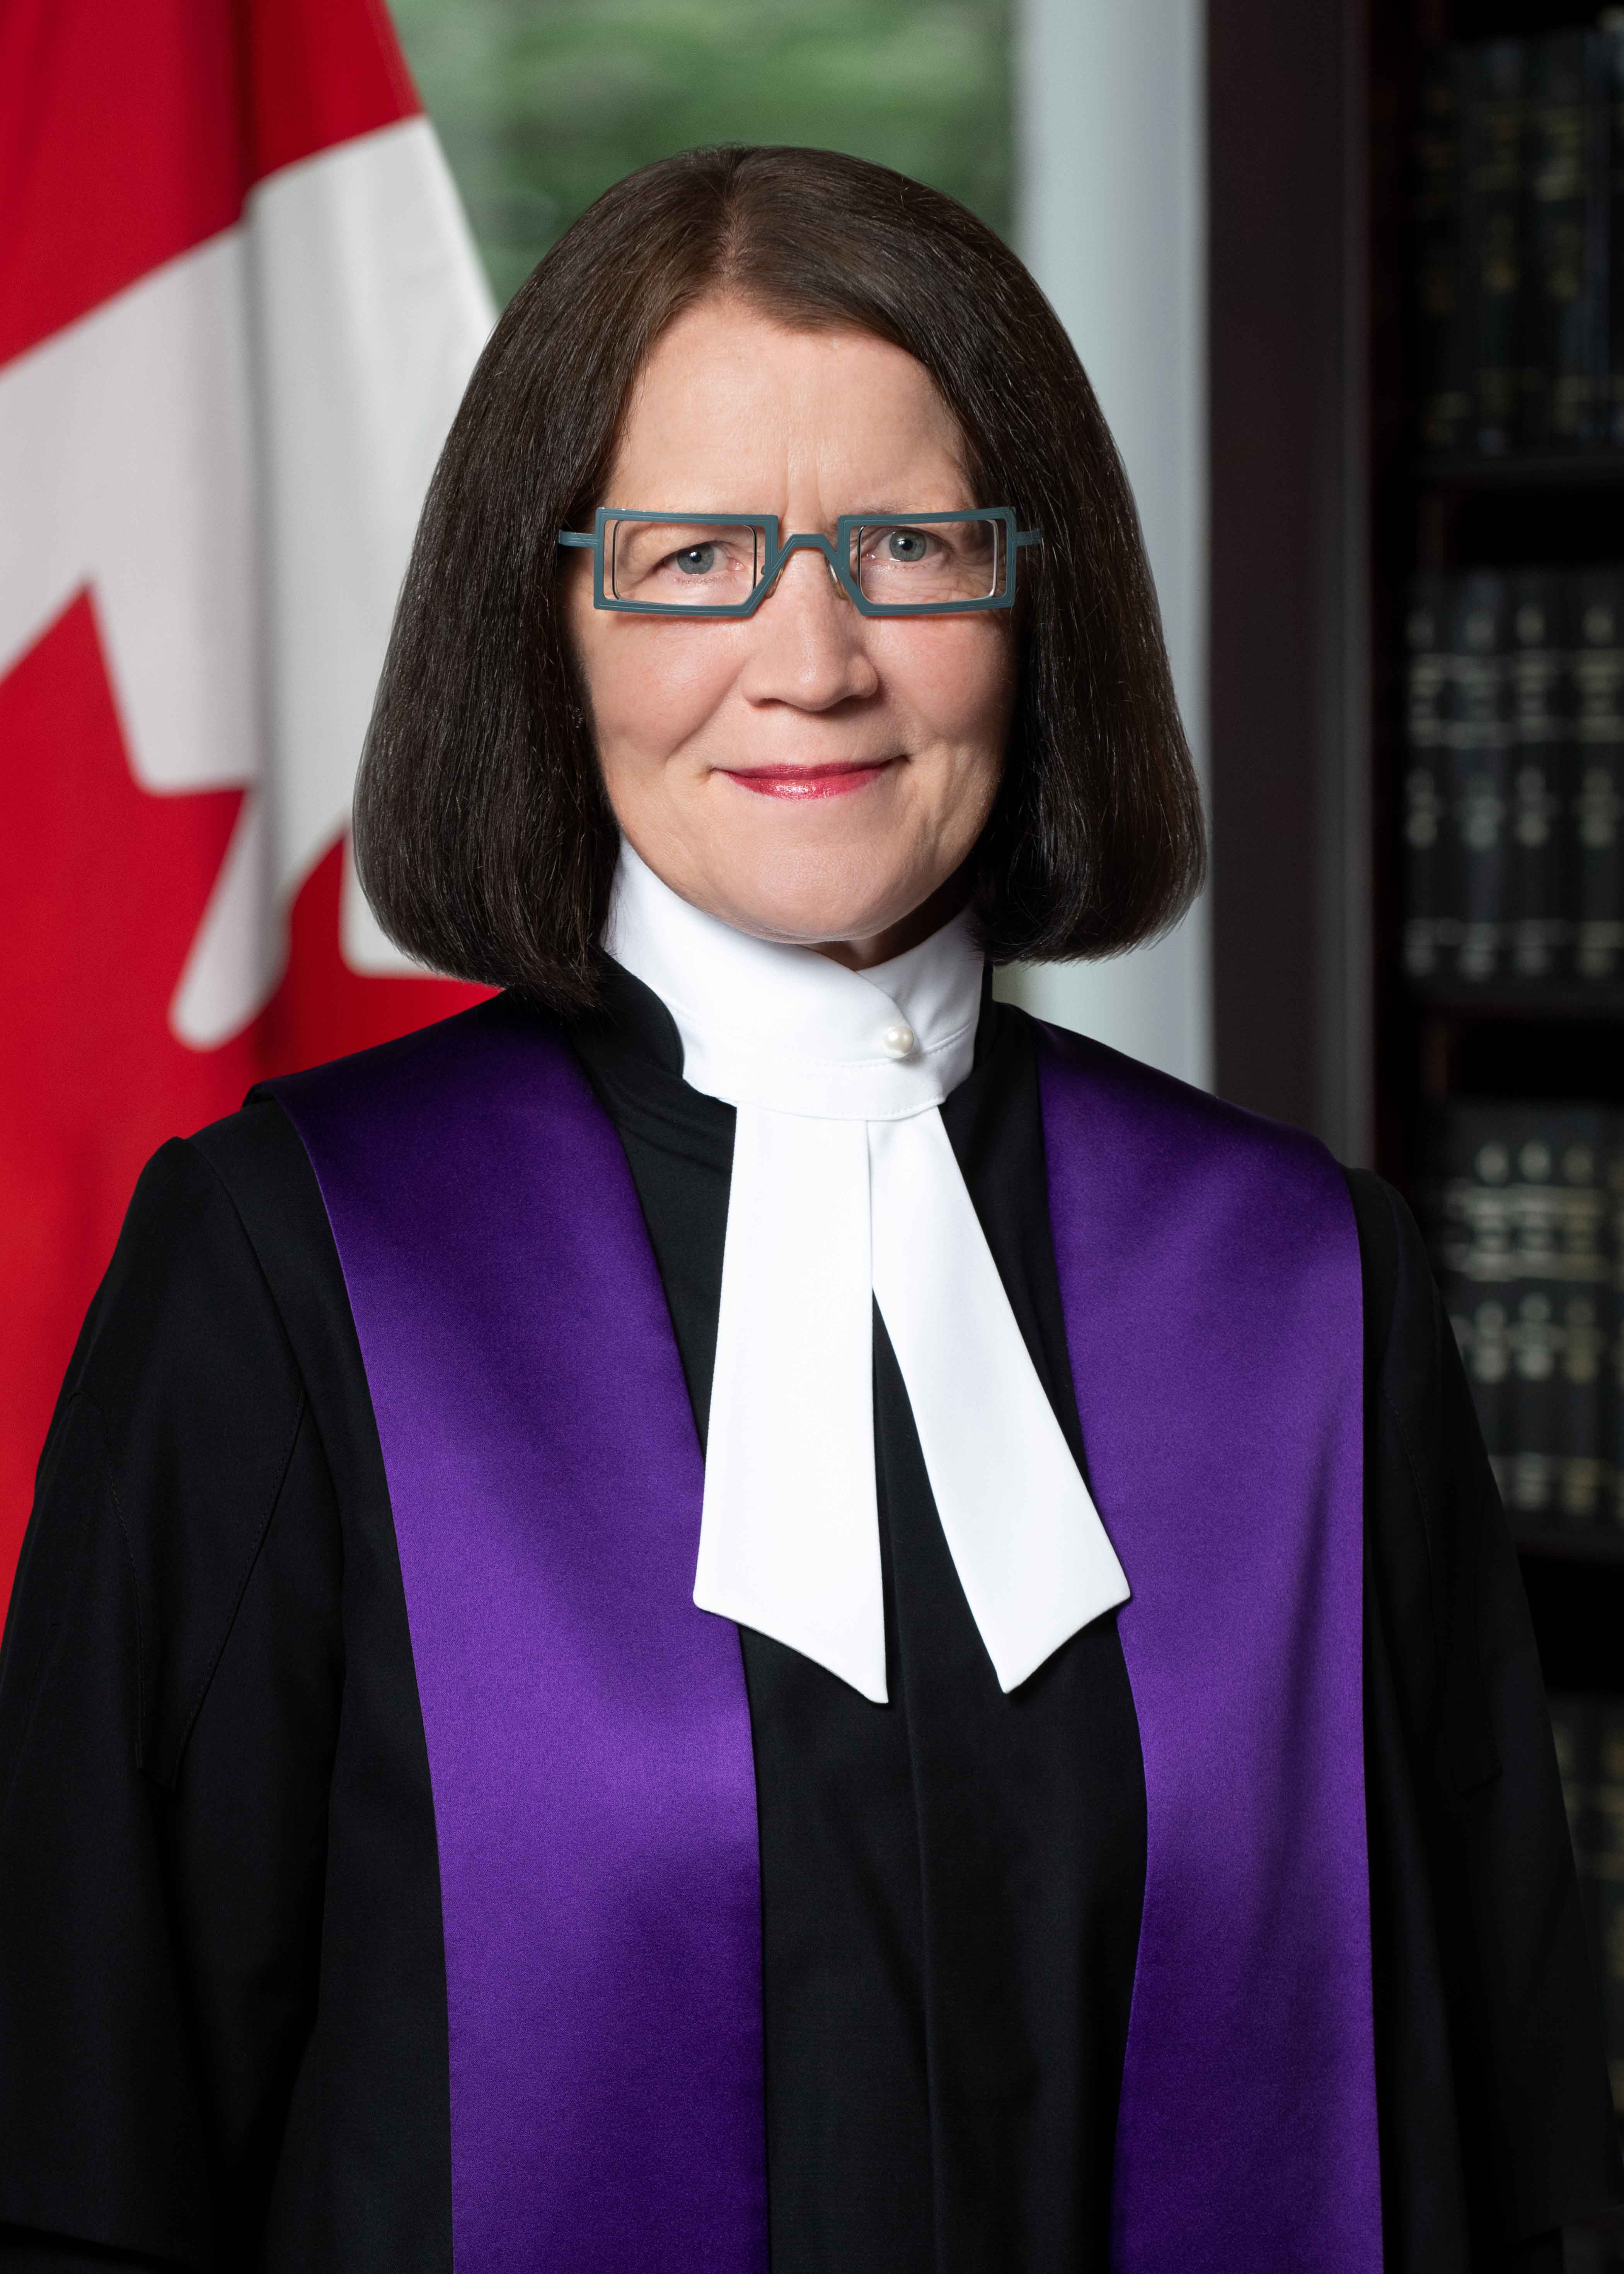 image: The Honourable Kathleen T. Lyons